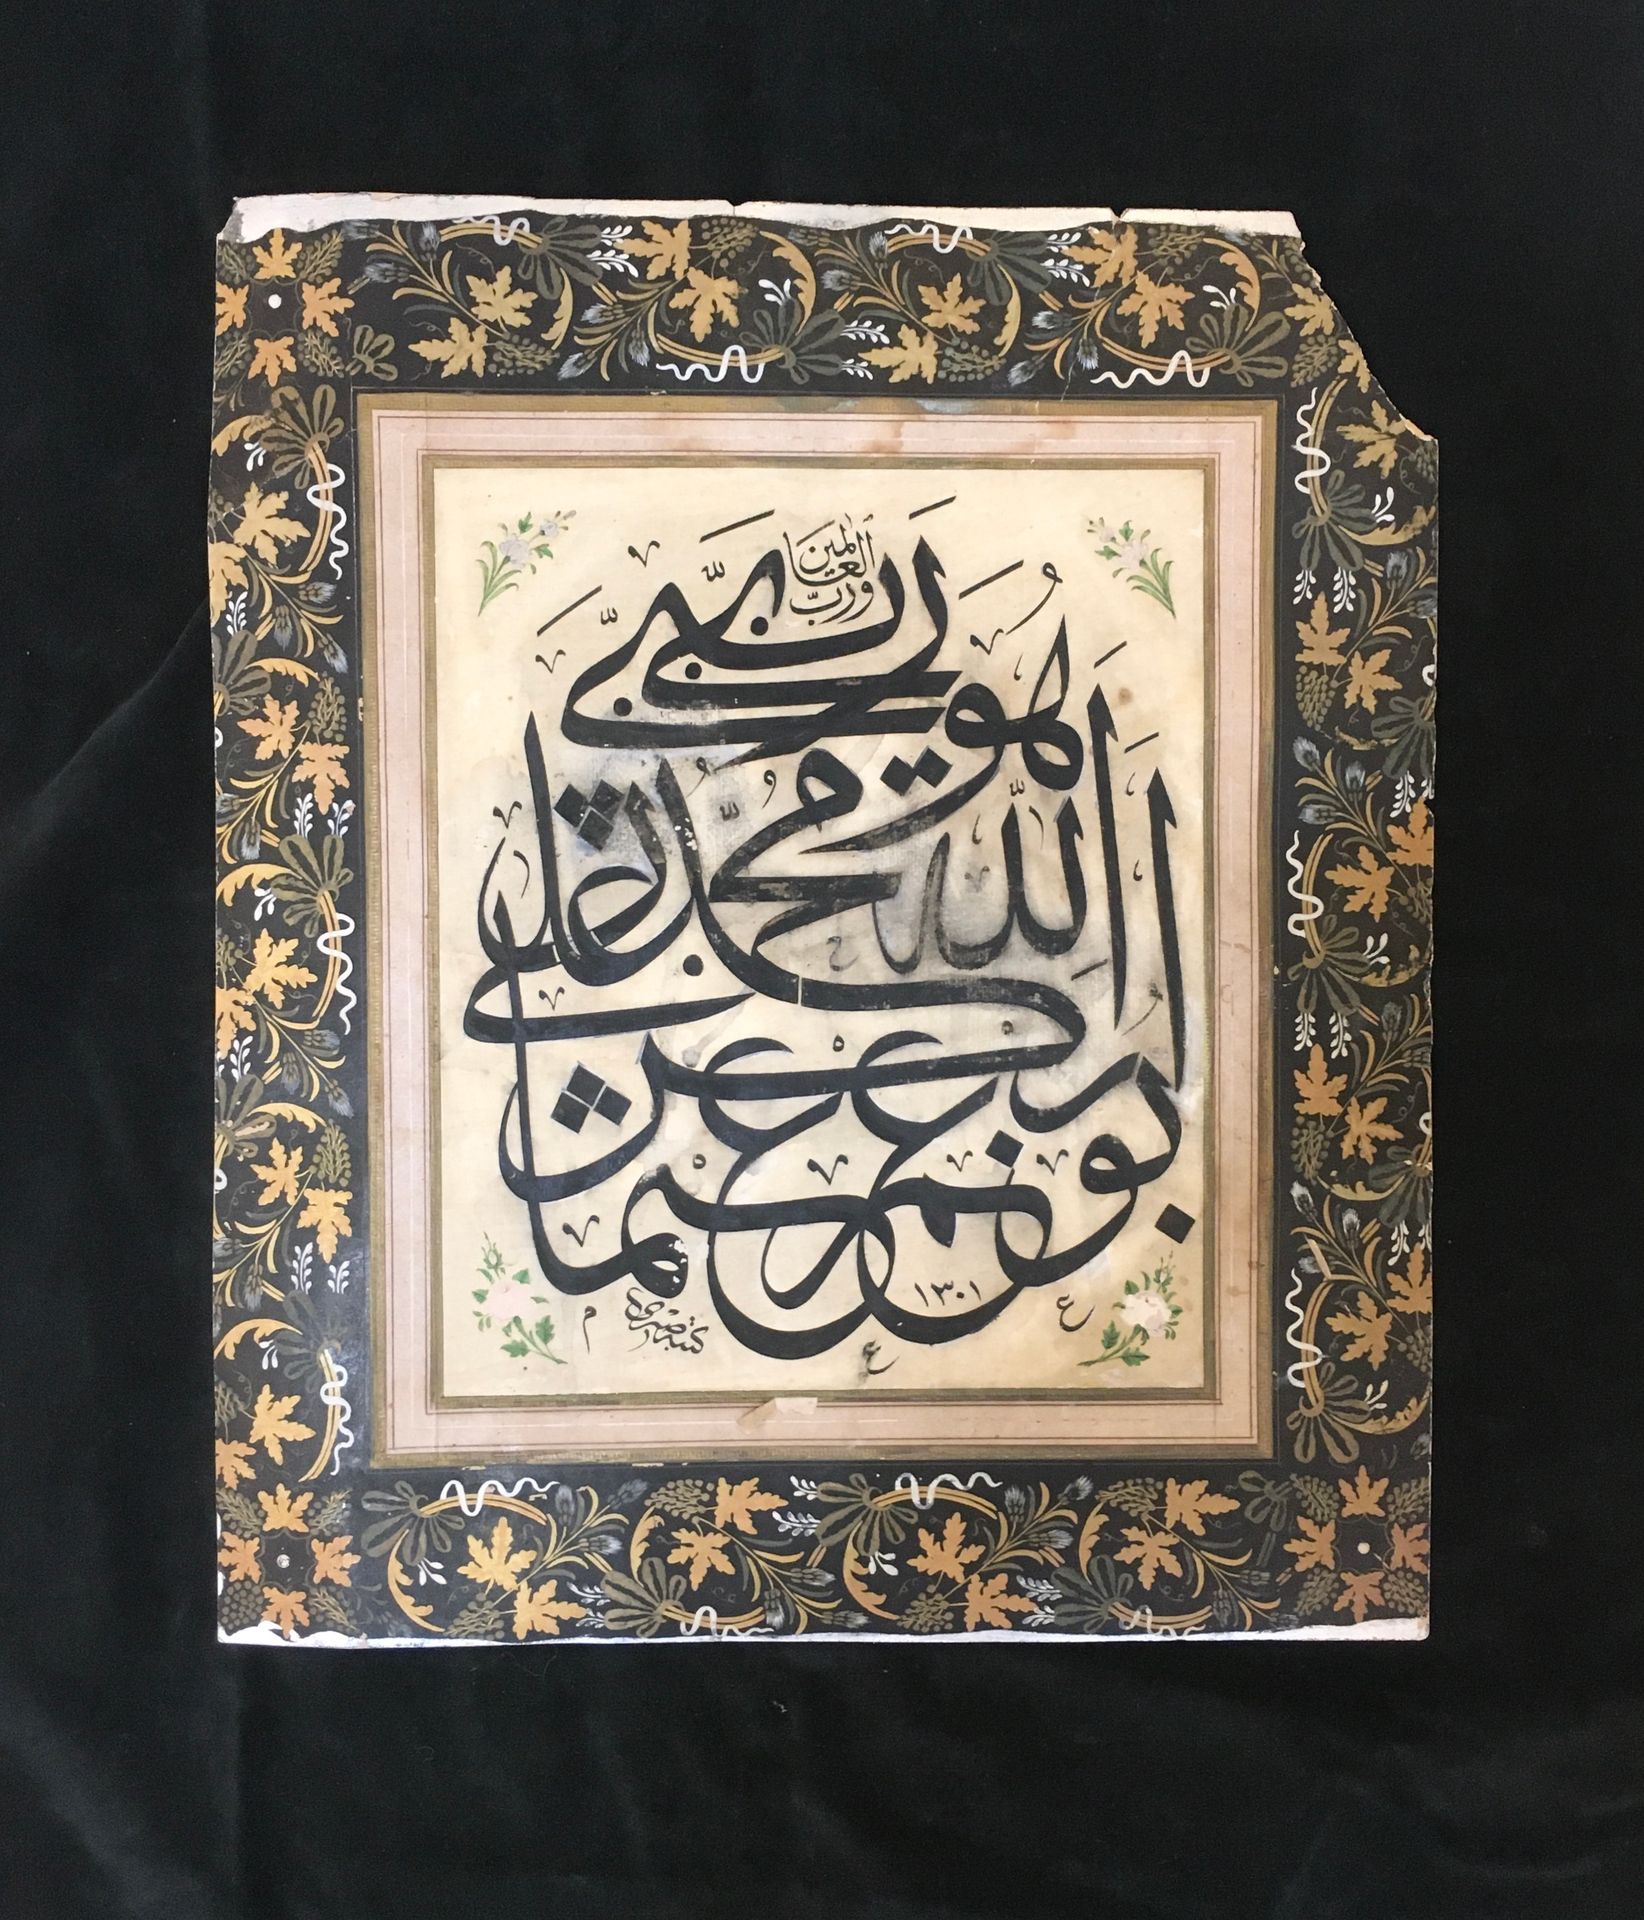 Calligraphie signée Sabri et datée 1301H. '''= 1883 题目为 "Al-'alamein wa hab"，用 "&hellip;